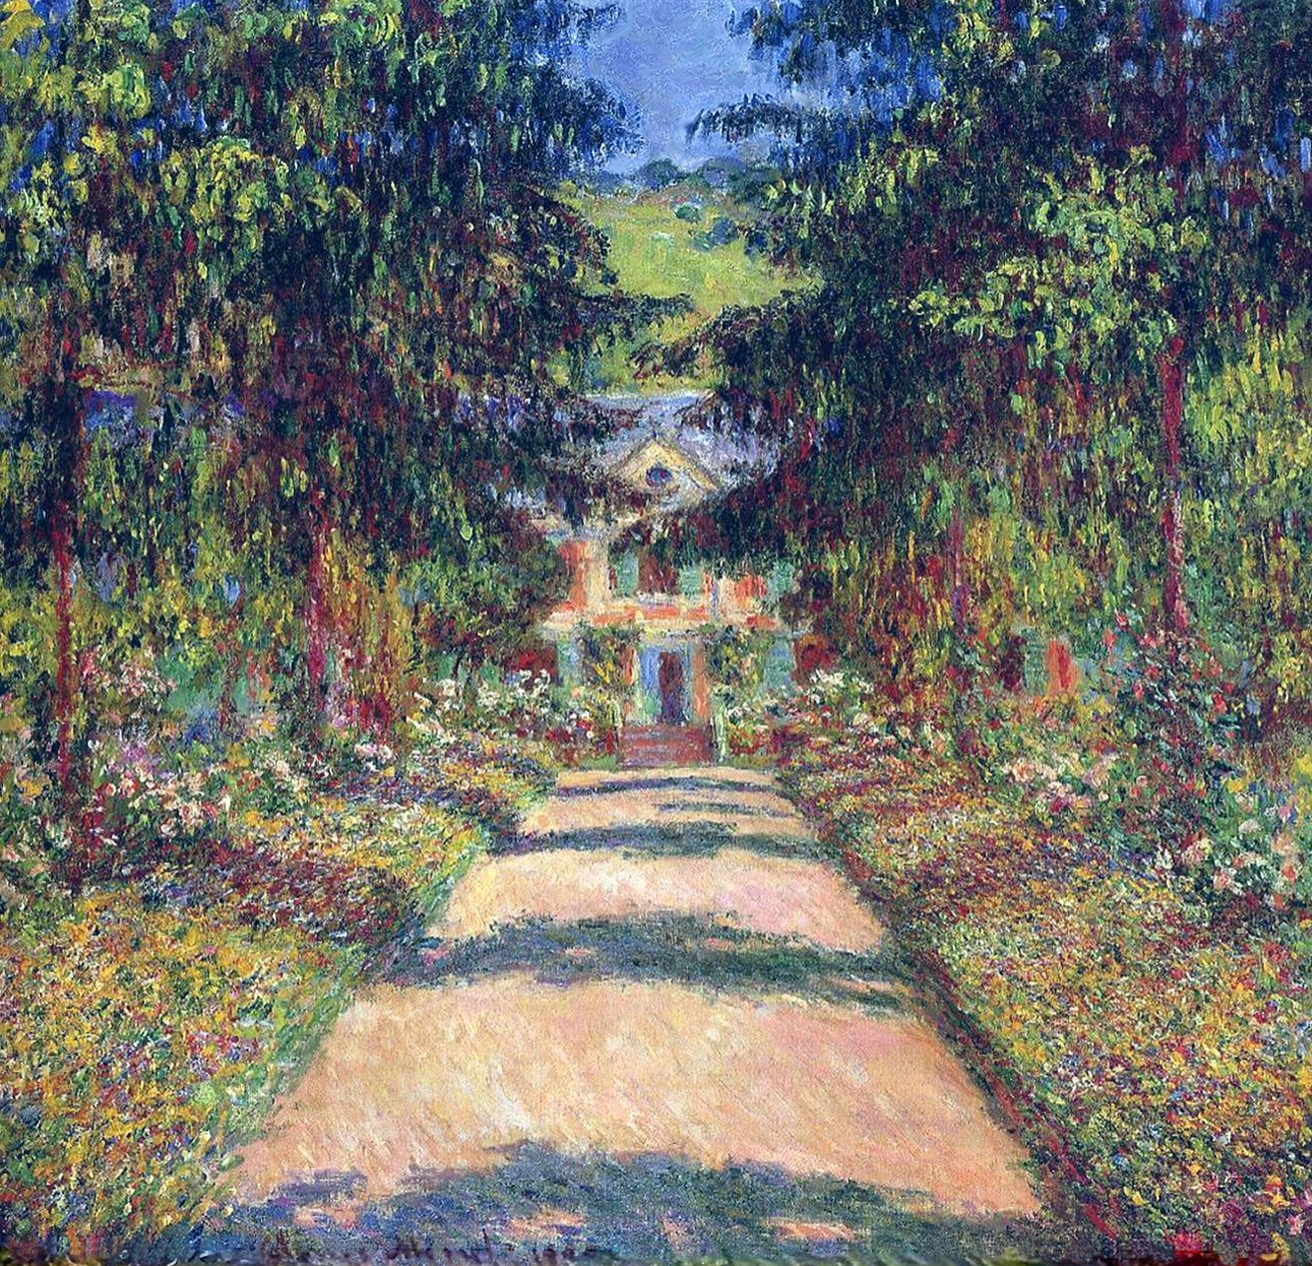 Claude+Monet-1840-1926 (899).jpg